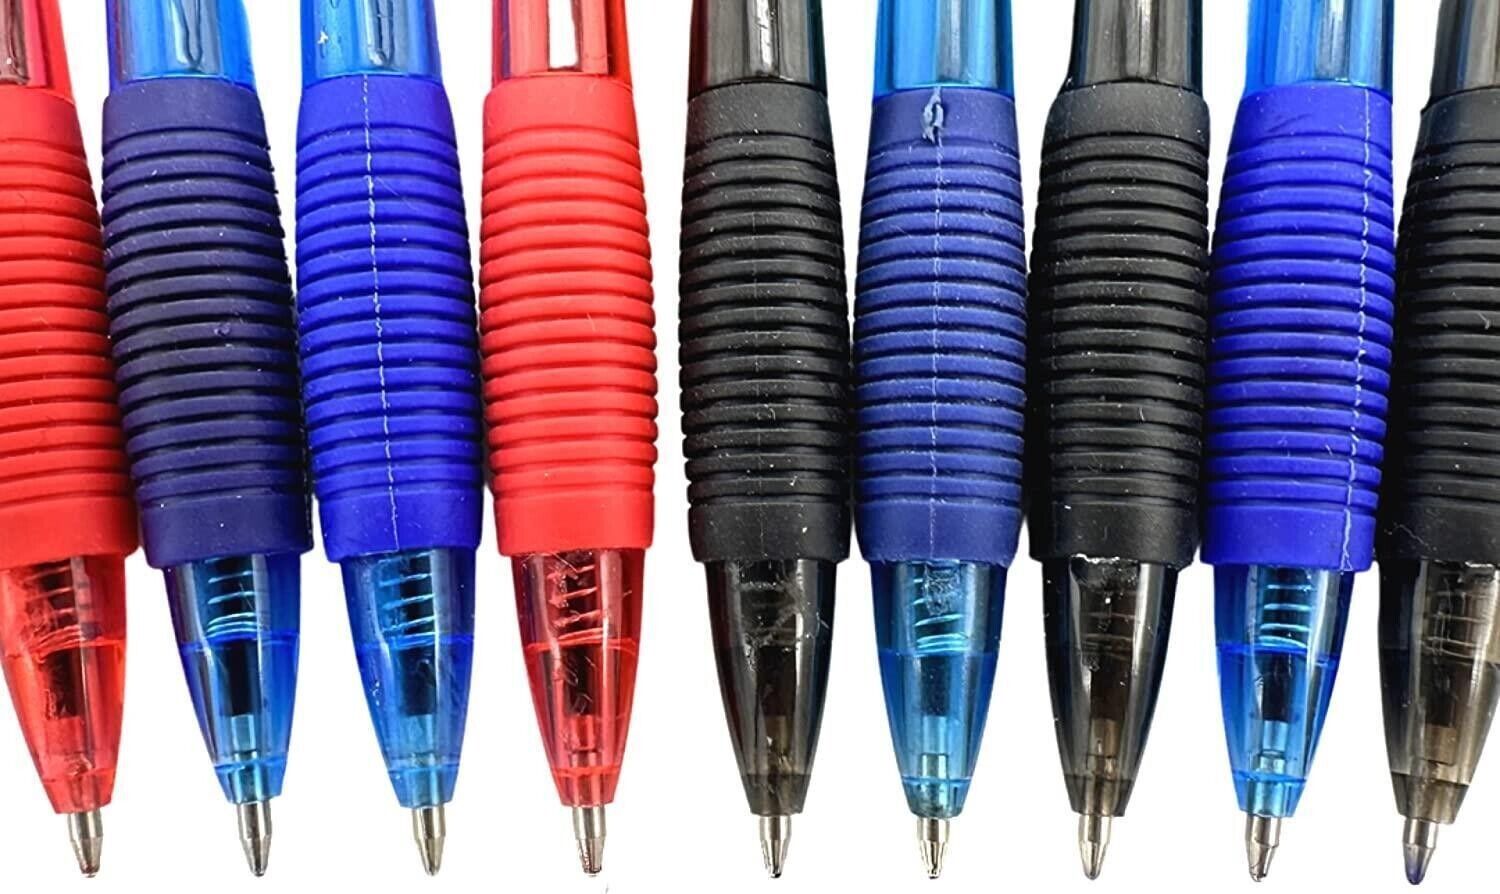 Soft Rubber Grip Pens Retractable Ballpoint Pen Black Blue Red Office School, 8x - ZYBUX